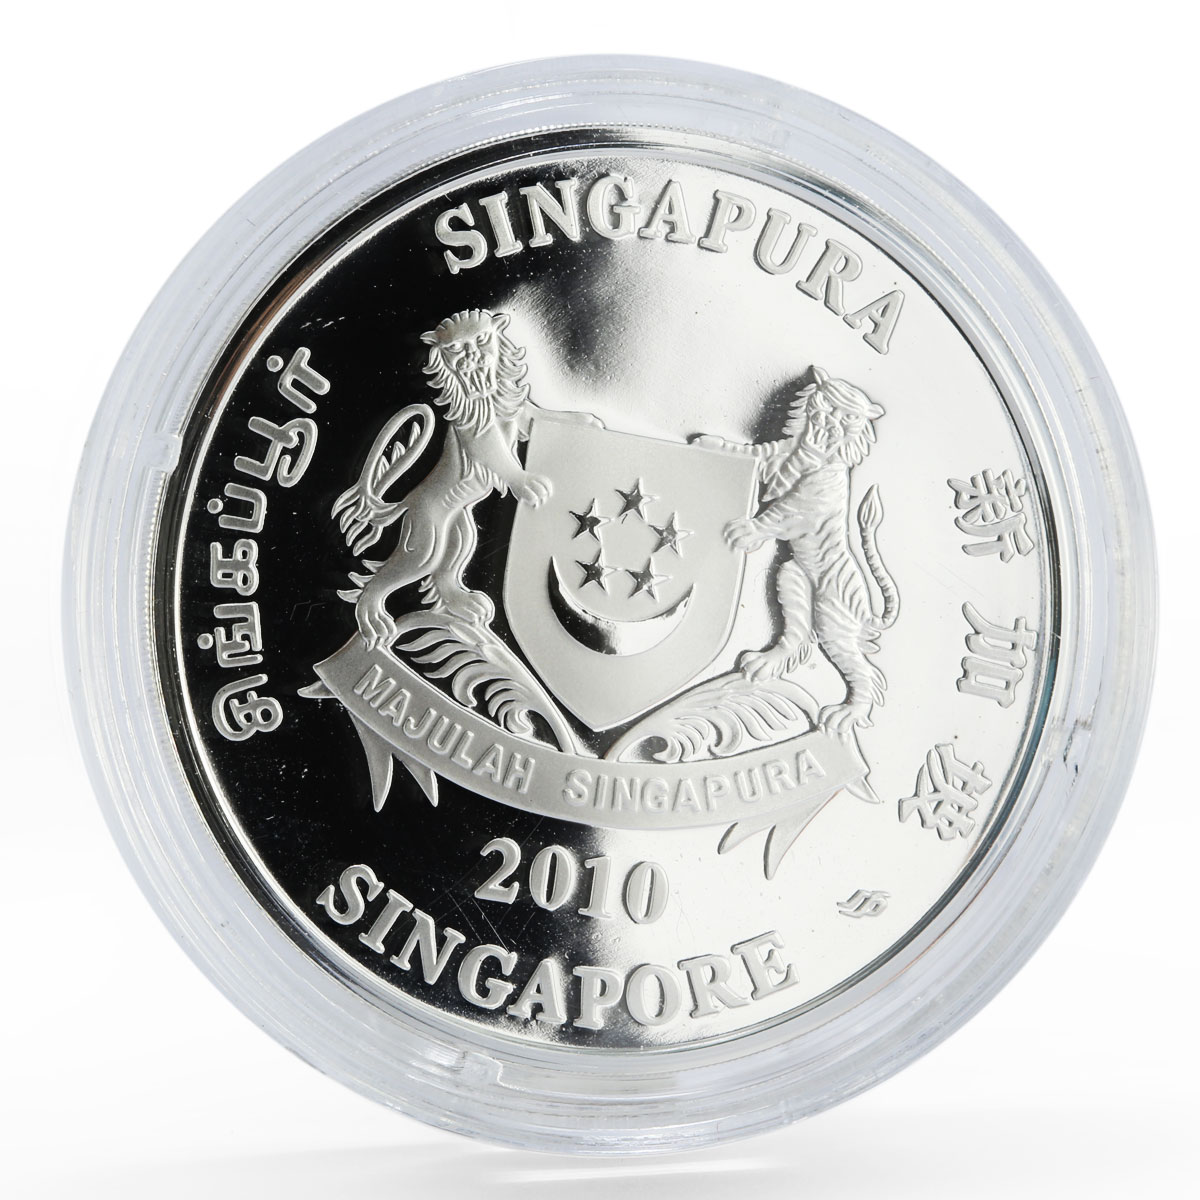 Singapore 1 dollar Aranda Noorah Alsadoff Orchid colored proof silver coin 2010